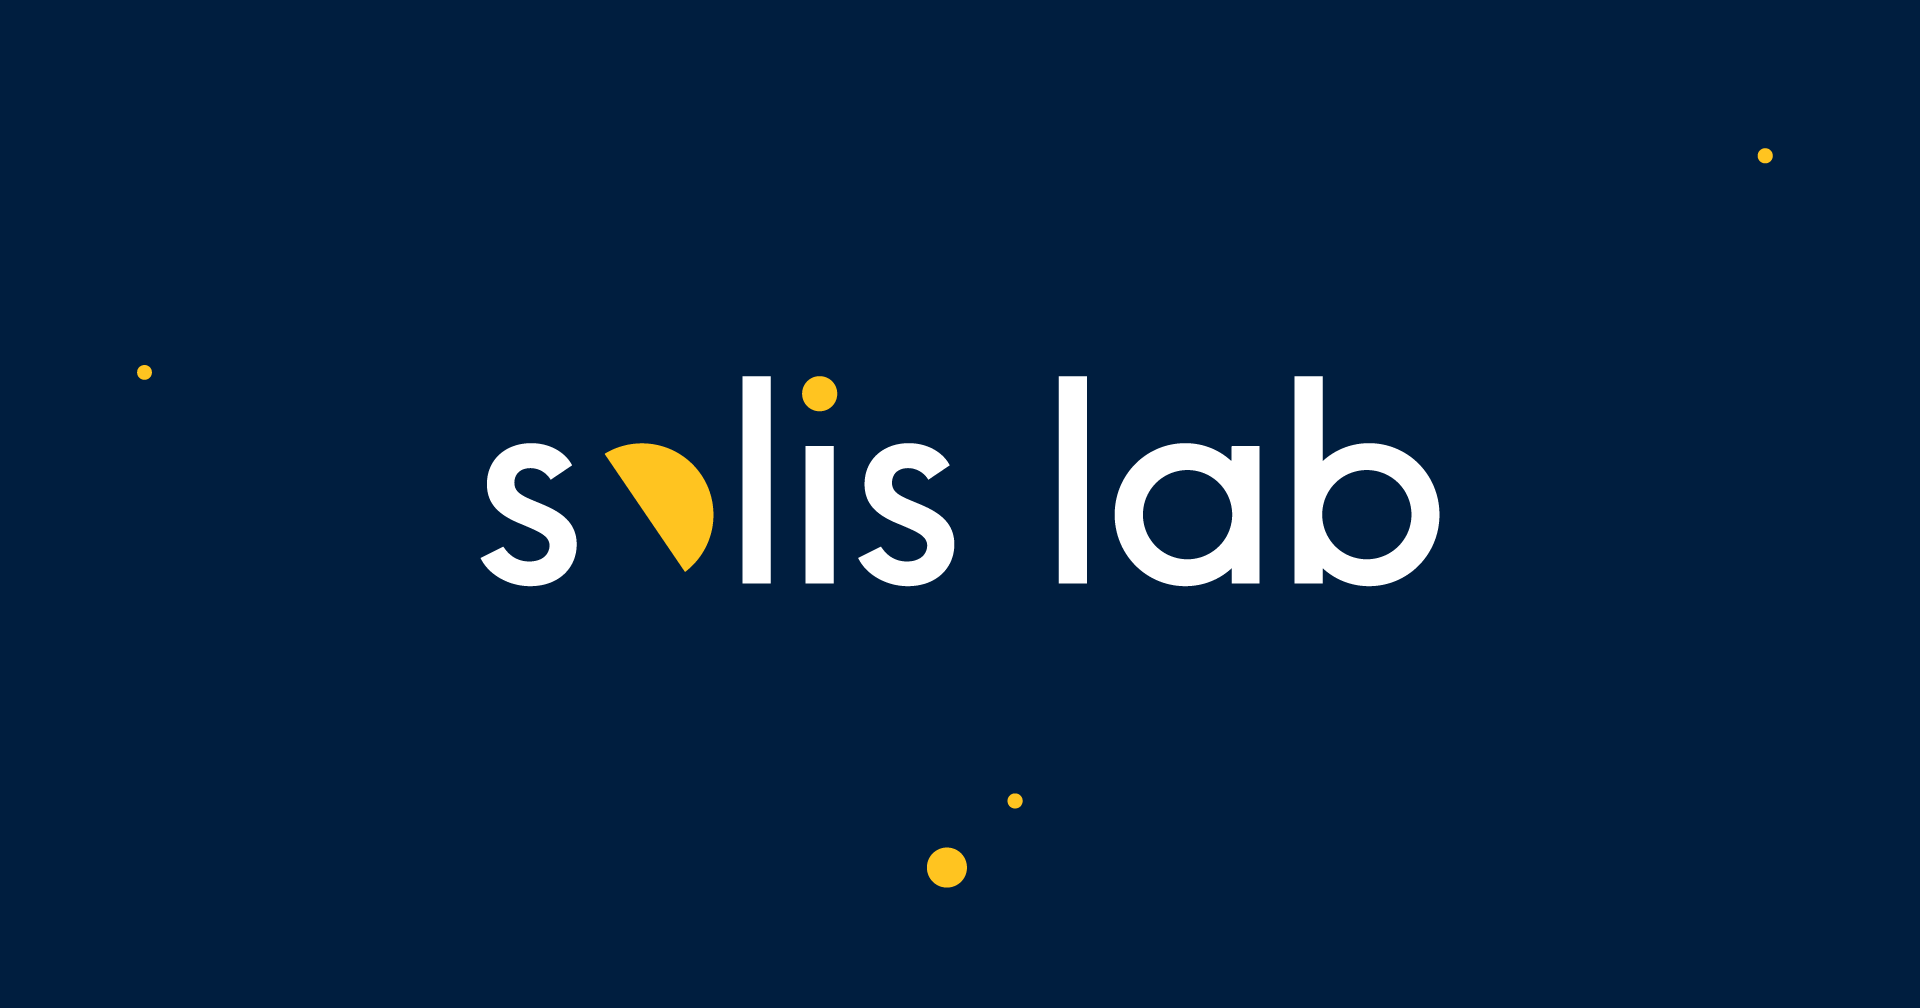 solis lab - web & IT development outsourcing - visual corporate identity design